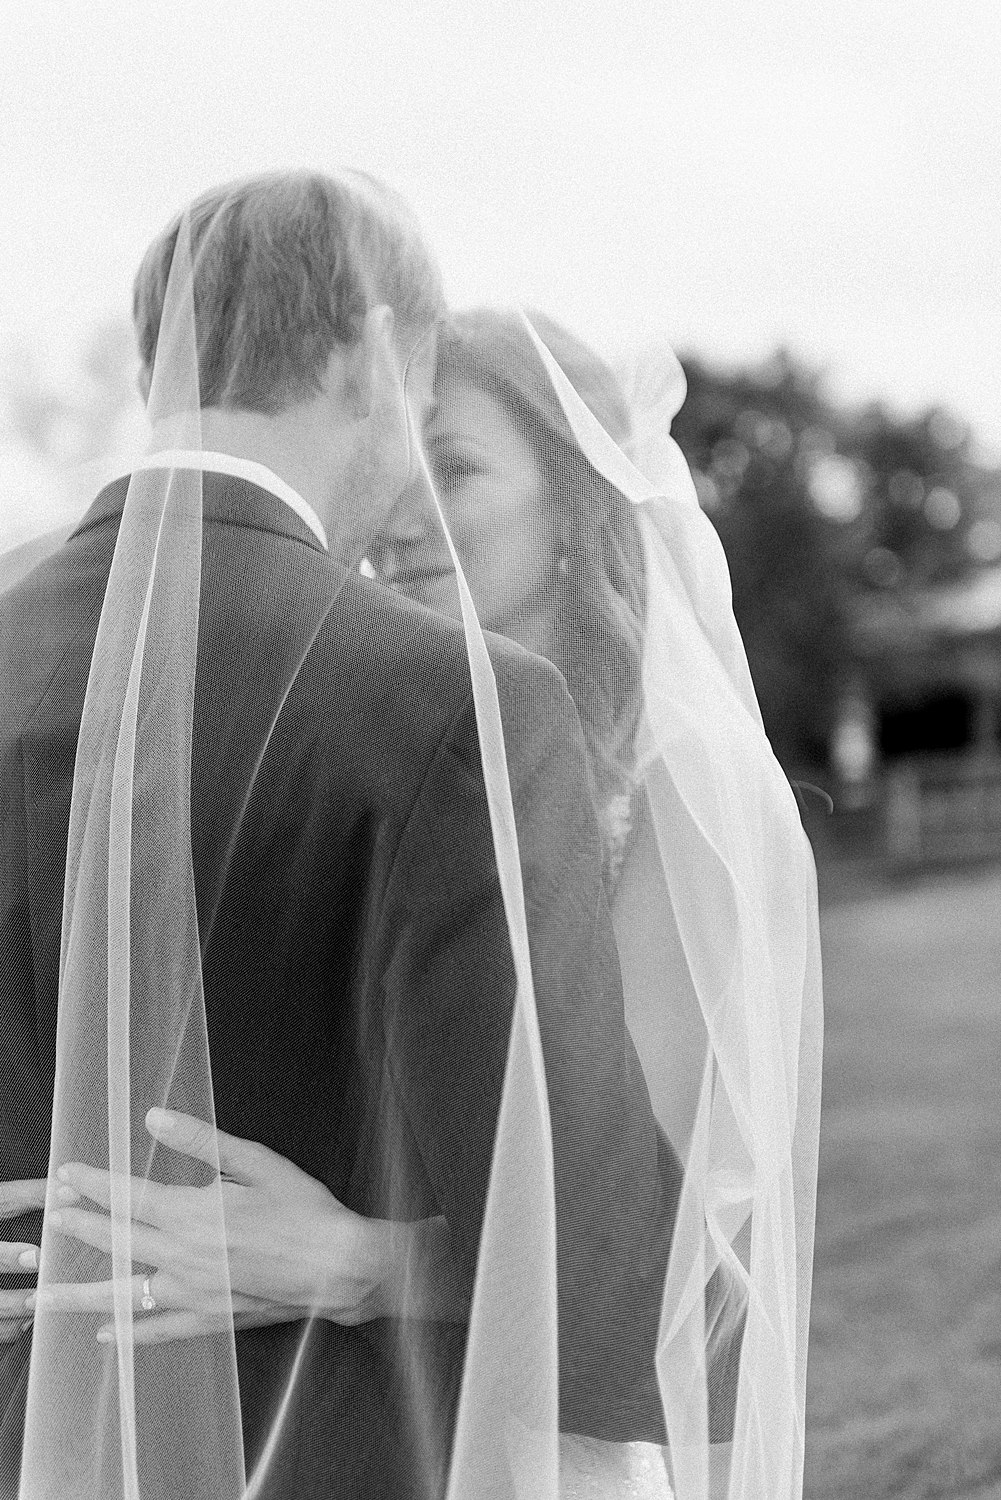 jessica & Andrew | walnut hill farm wedding | knoxville wedding photographer | juicebeats photography | wedding photography in knoxville